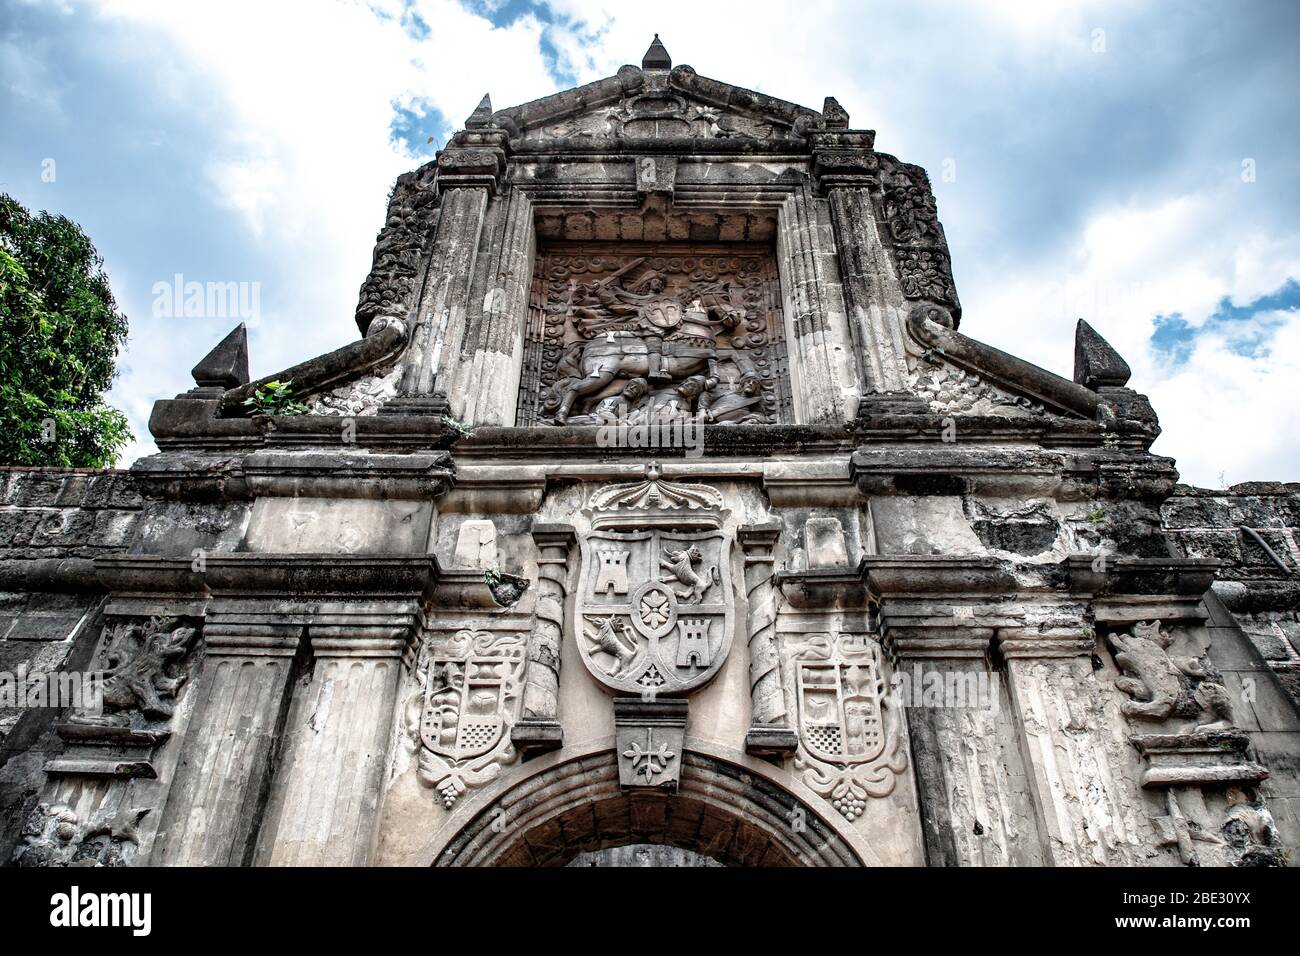 Main gate to the 'Fuerte de Santiago' fortress in Intramuros, Manila, Philippines Stock Photo